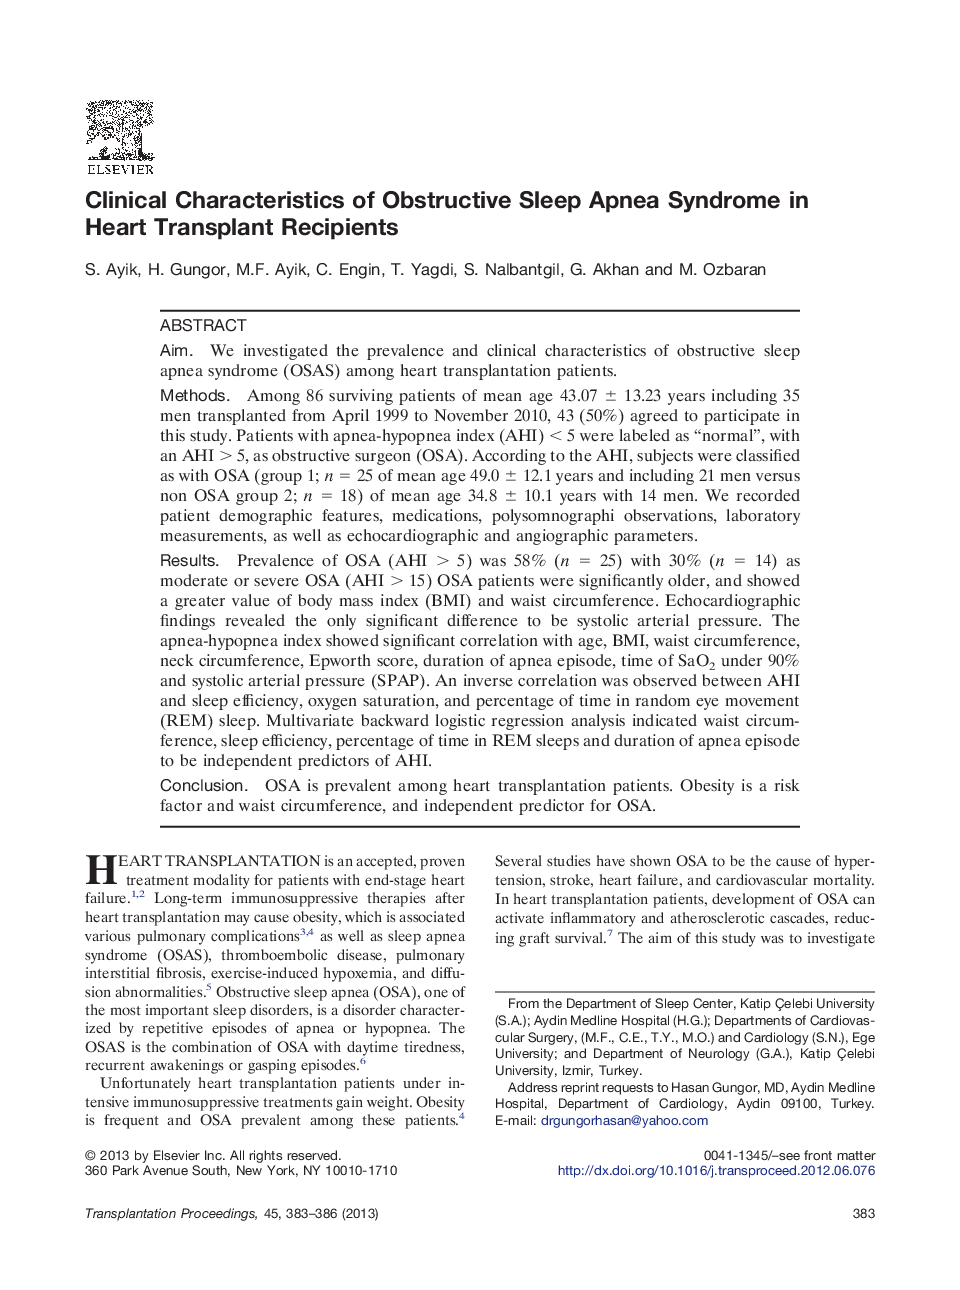 Clinical Characteristics of Obstructive Sleep Apnea Syndrome in Heart Transplant Recipients